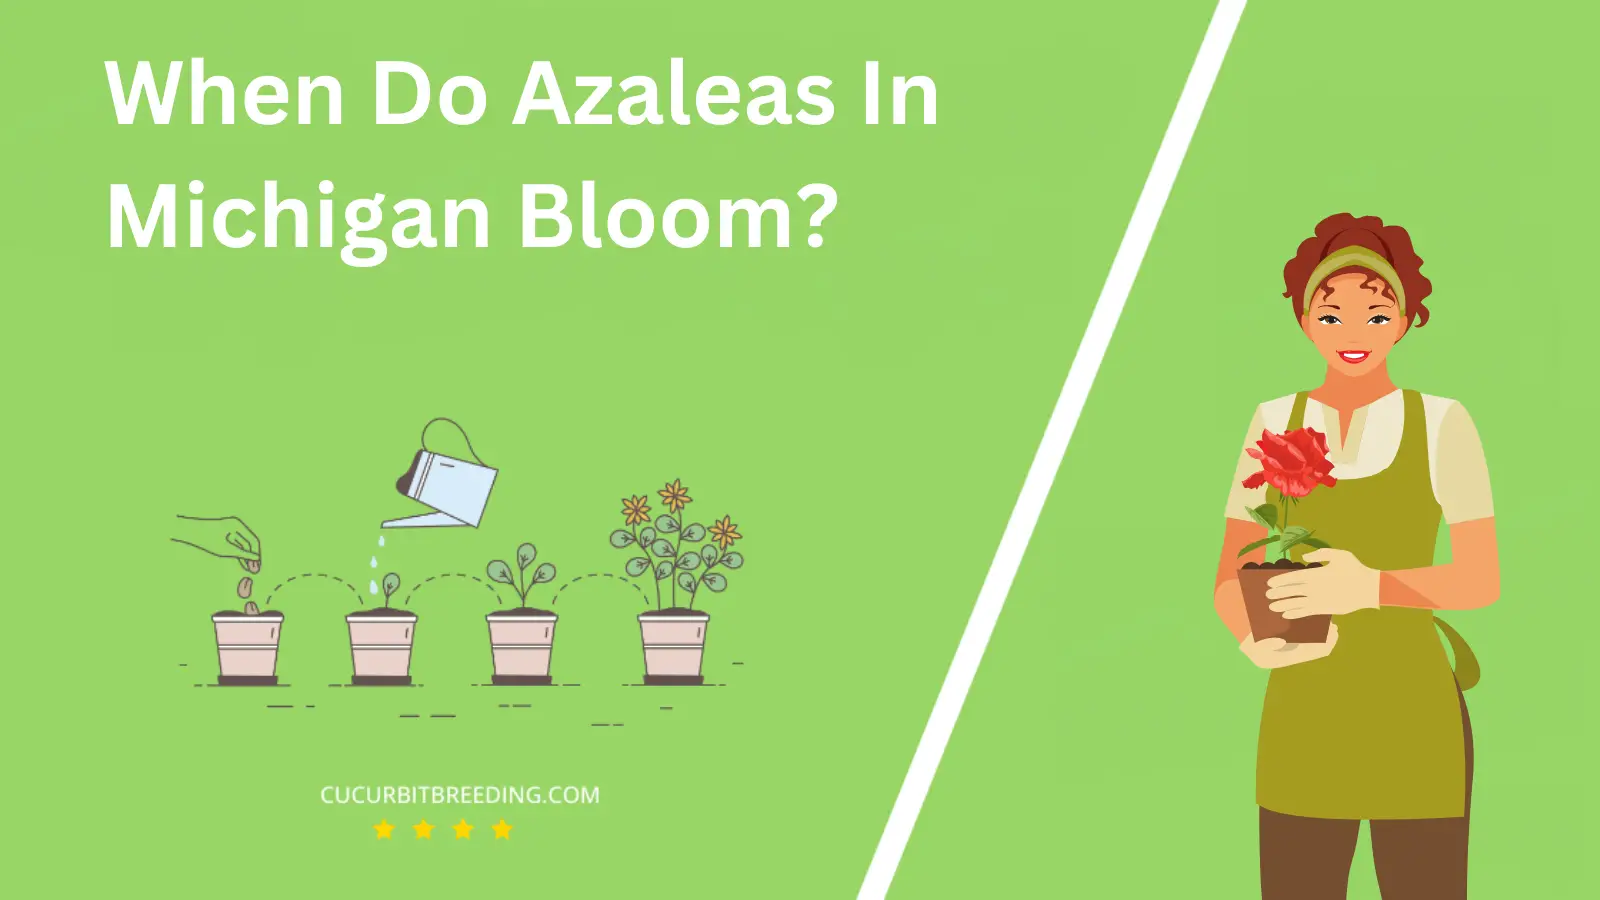 When Do Azaleas In Michigan Bloom?